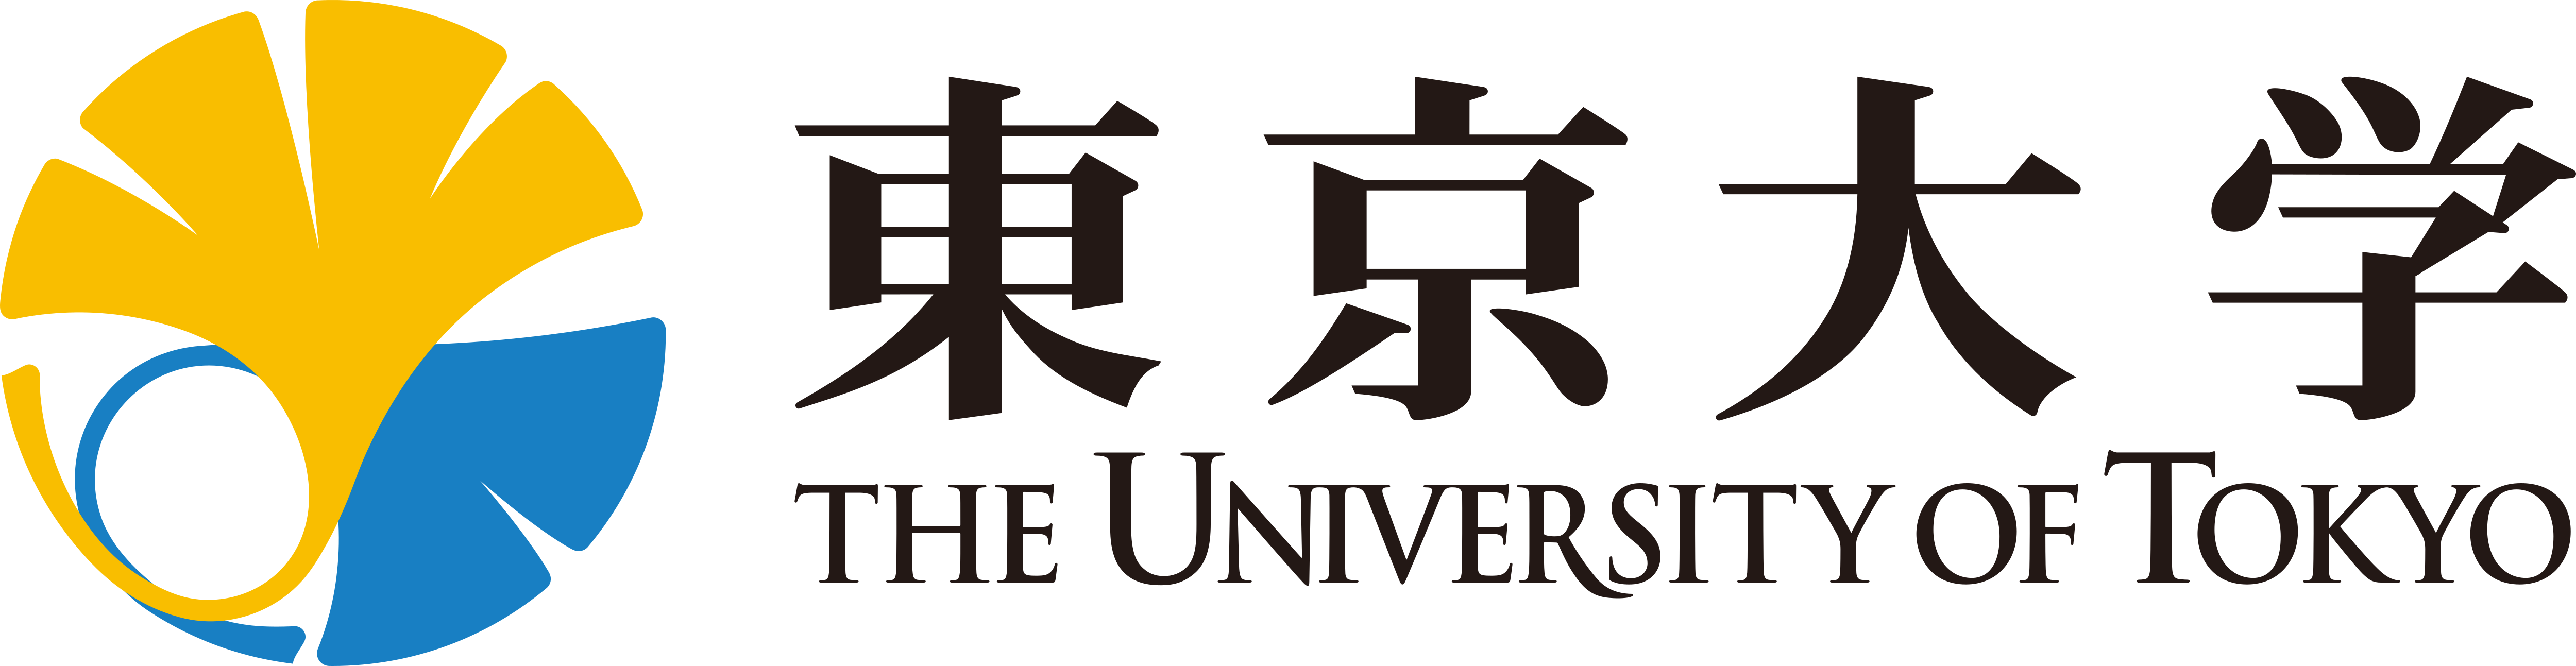 university of tokyo logo